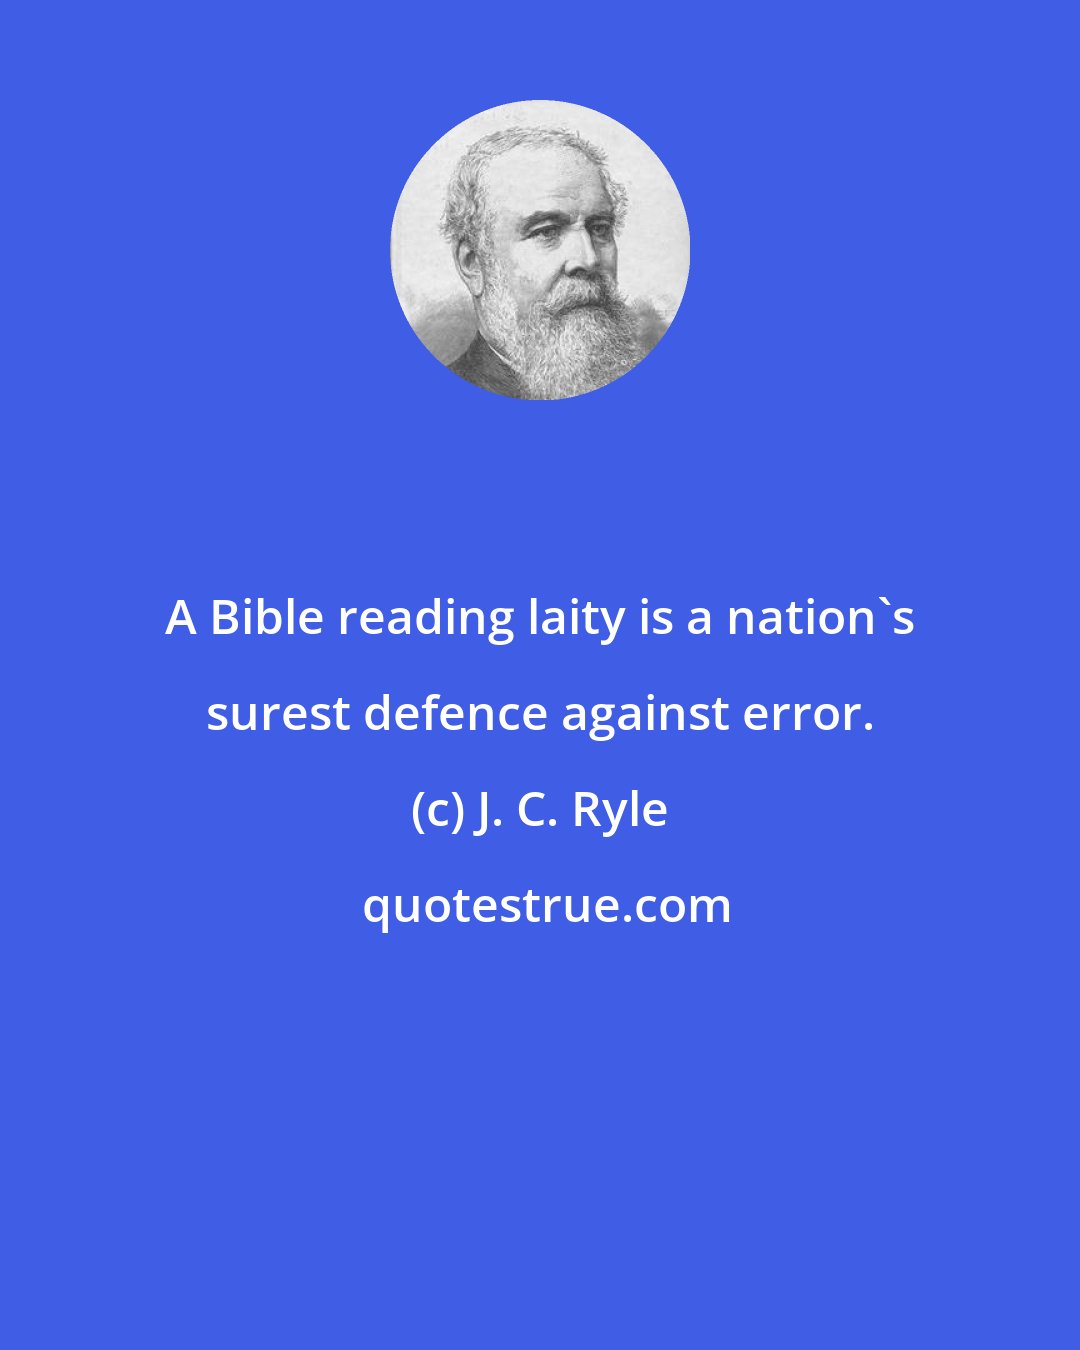 J. C. Ryle: A Bible reading laity is a nation's surest defence against error.